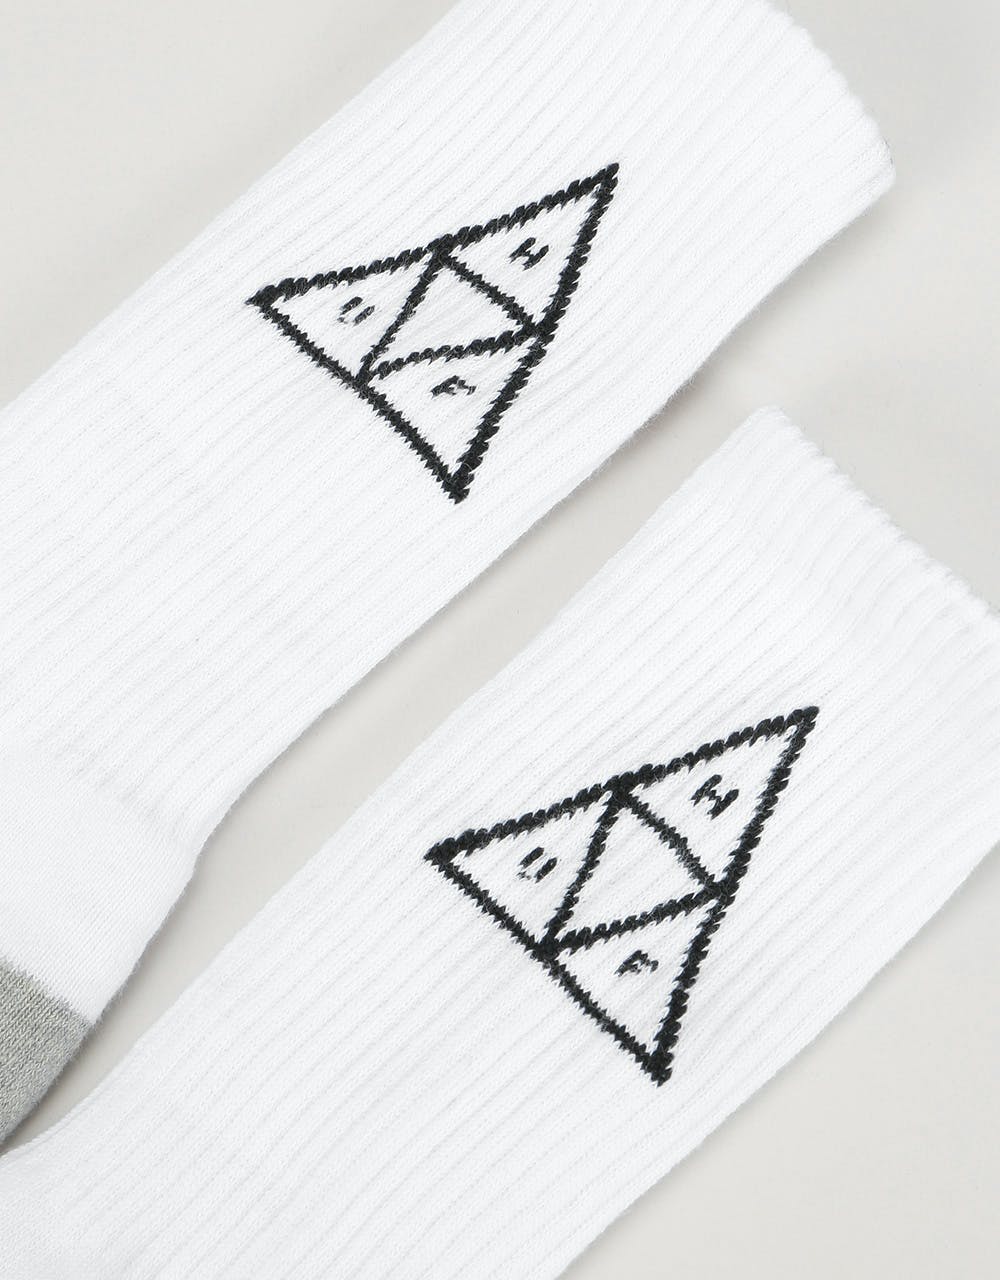 HUF Triple Triangle Crew Socks - White/Black